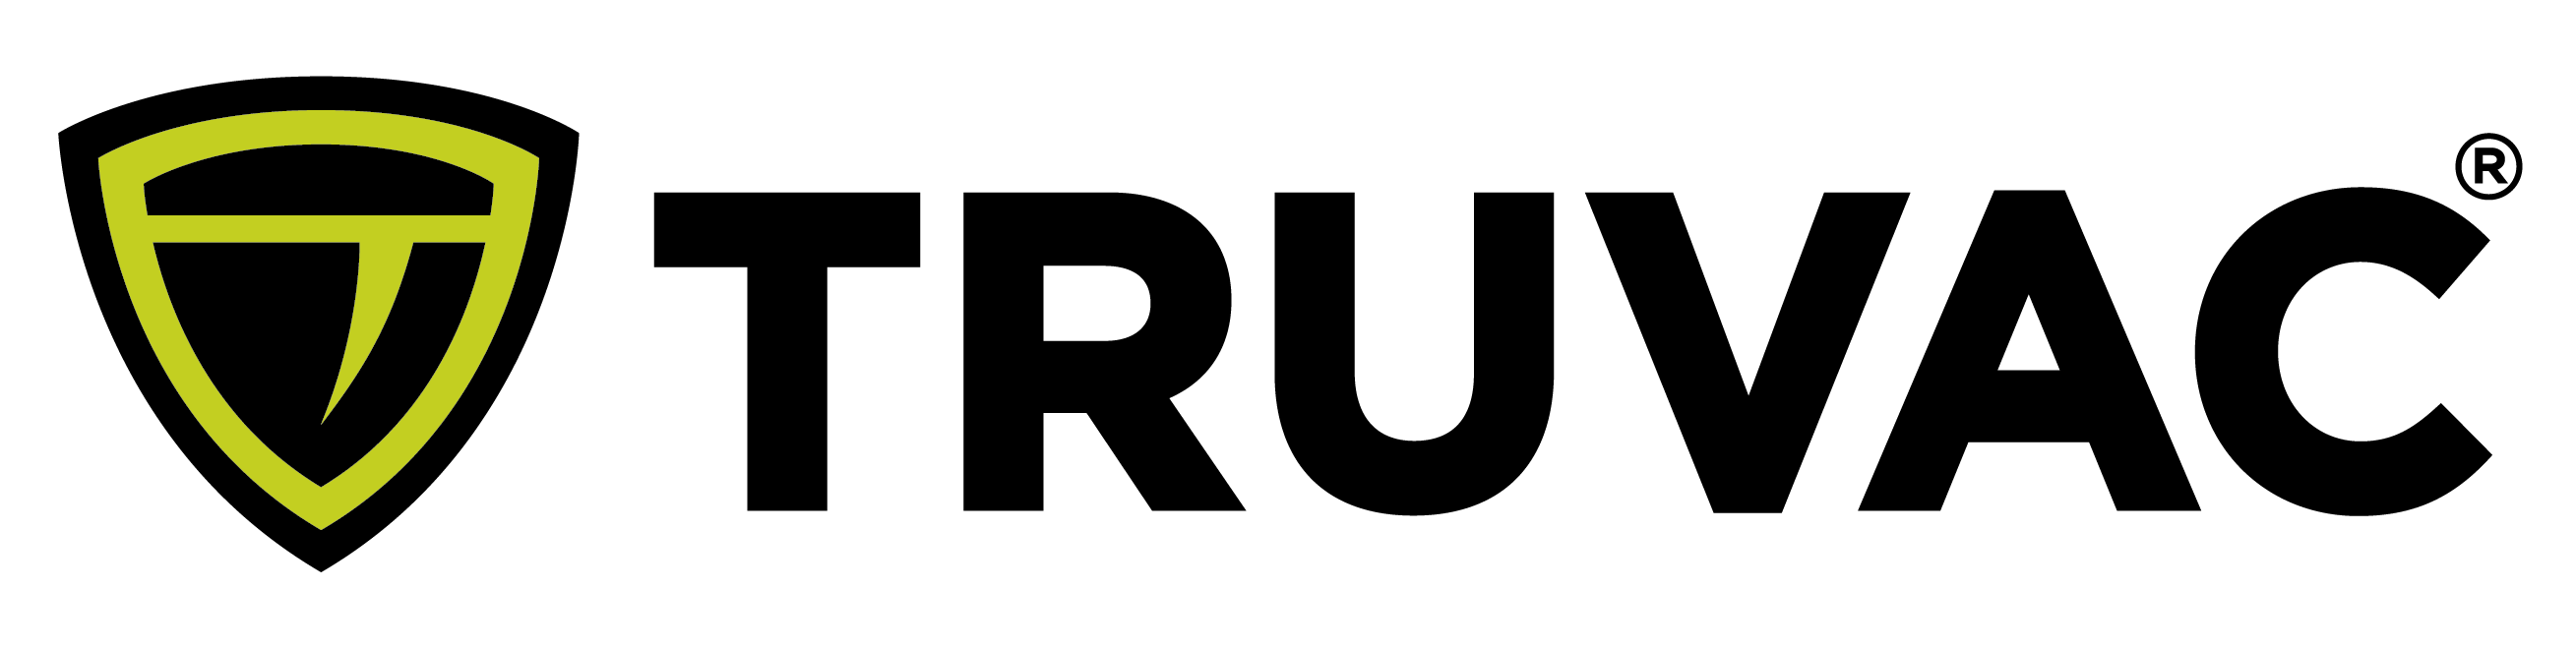 TRUVAC_Logo_APPAREL